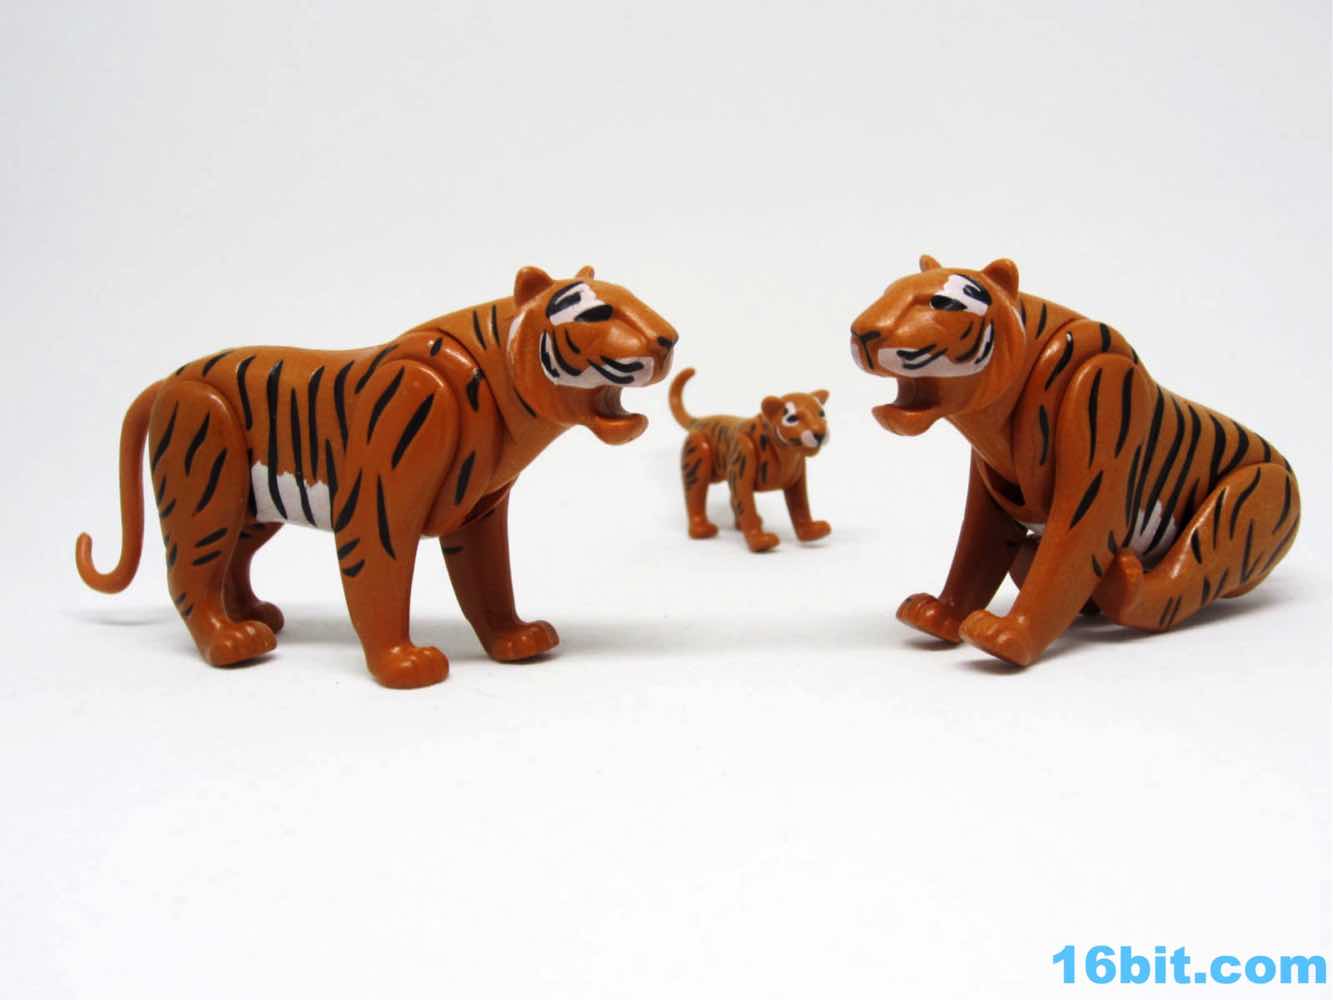 playmobil tiger family